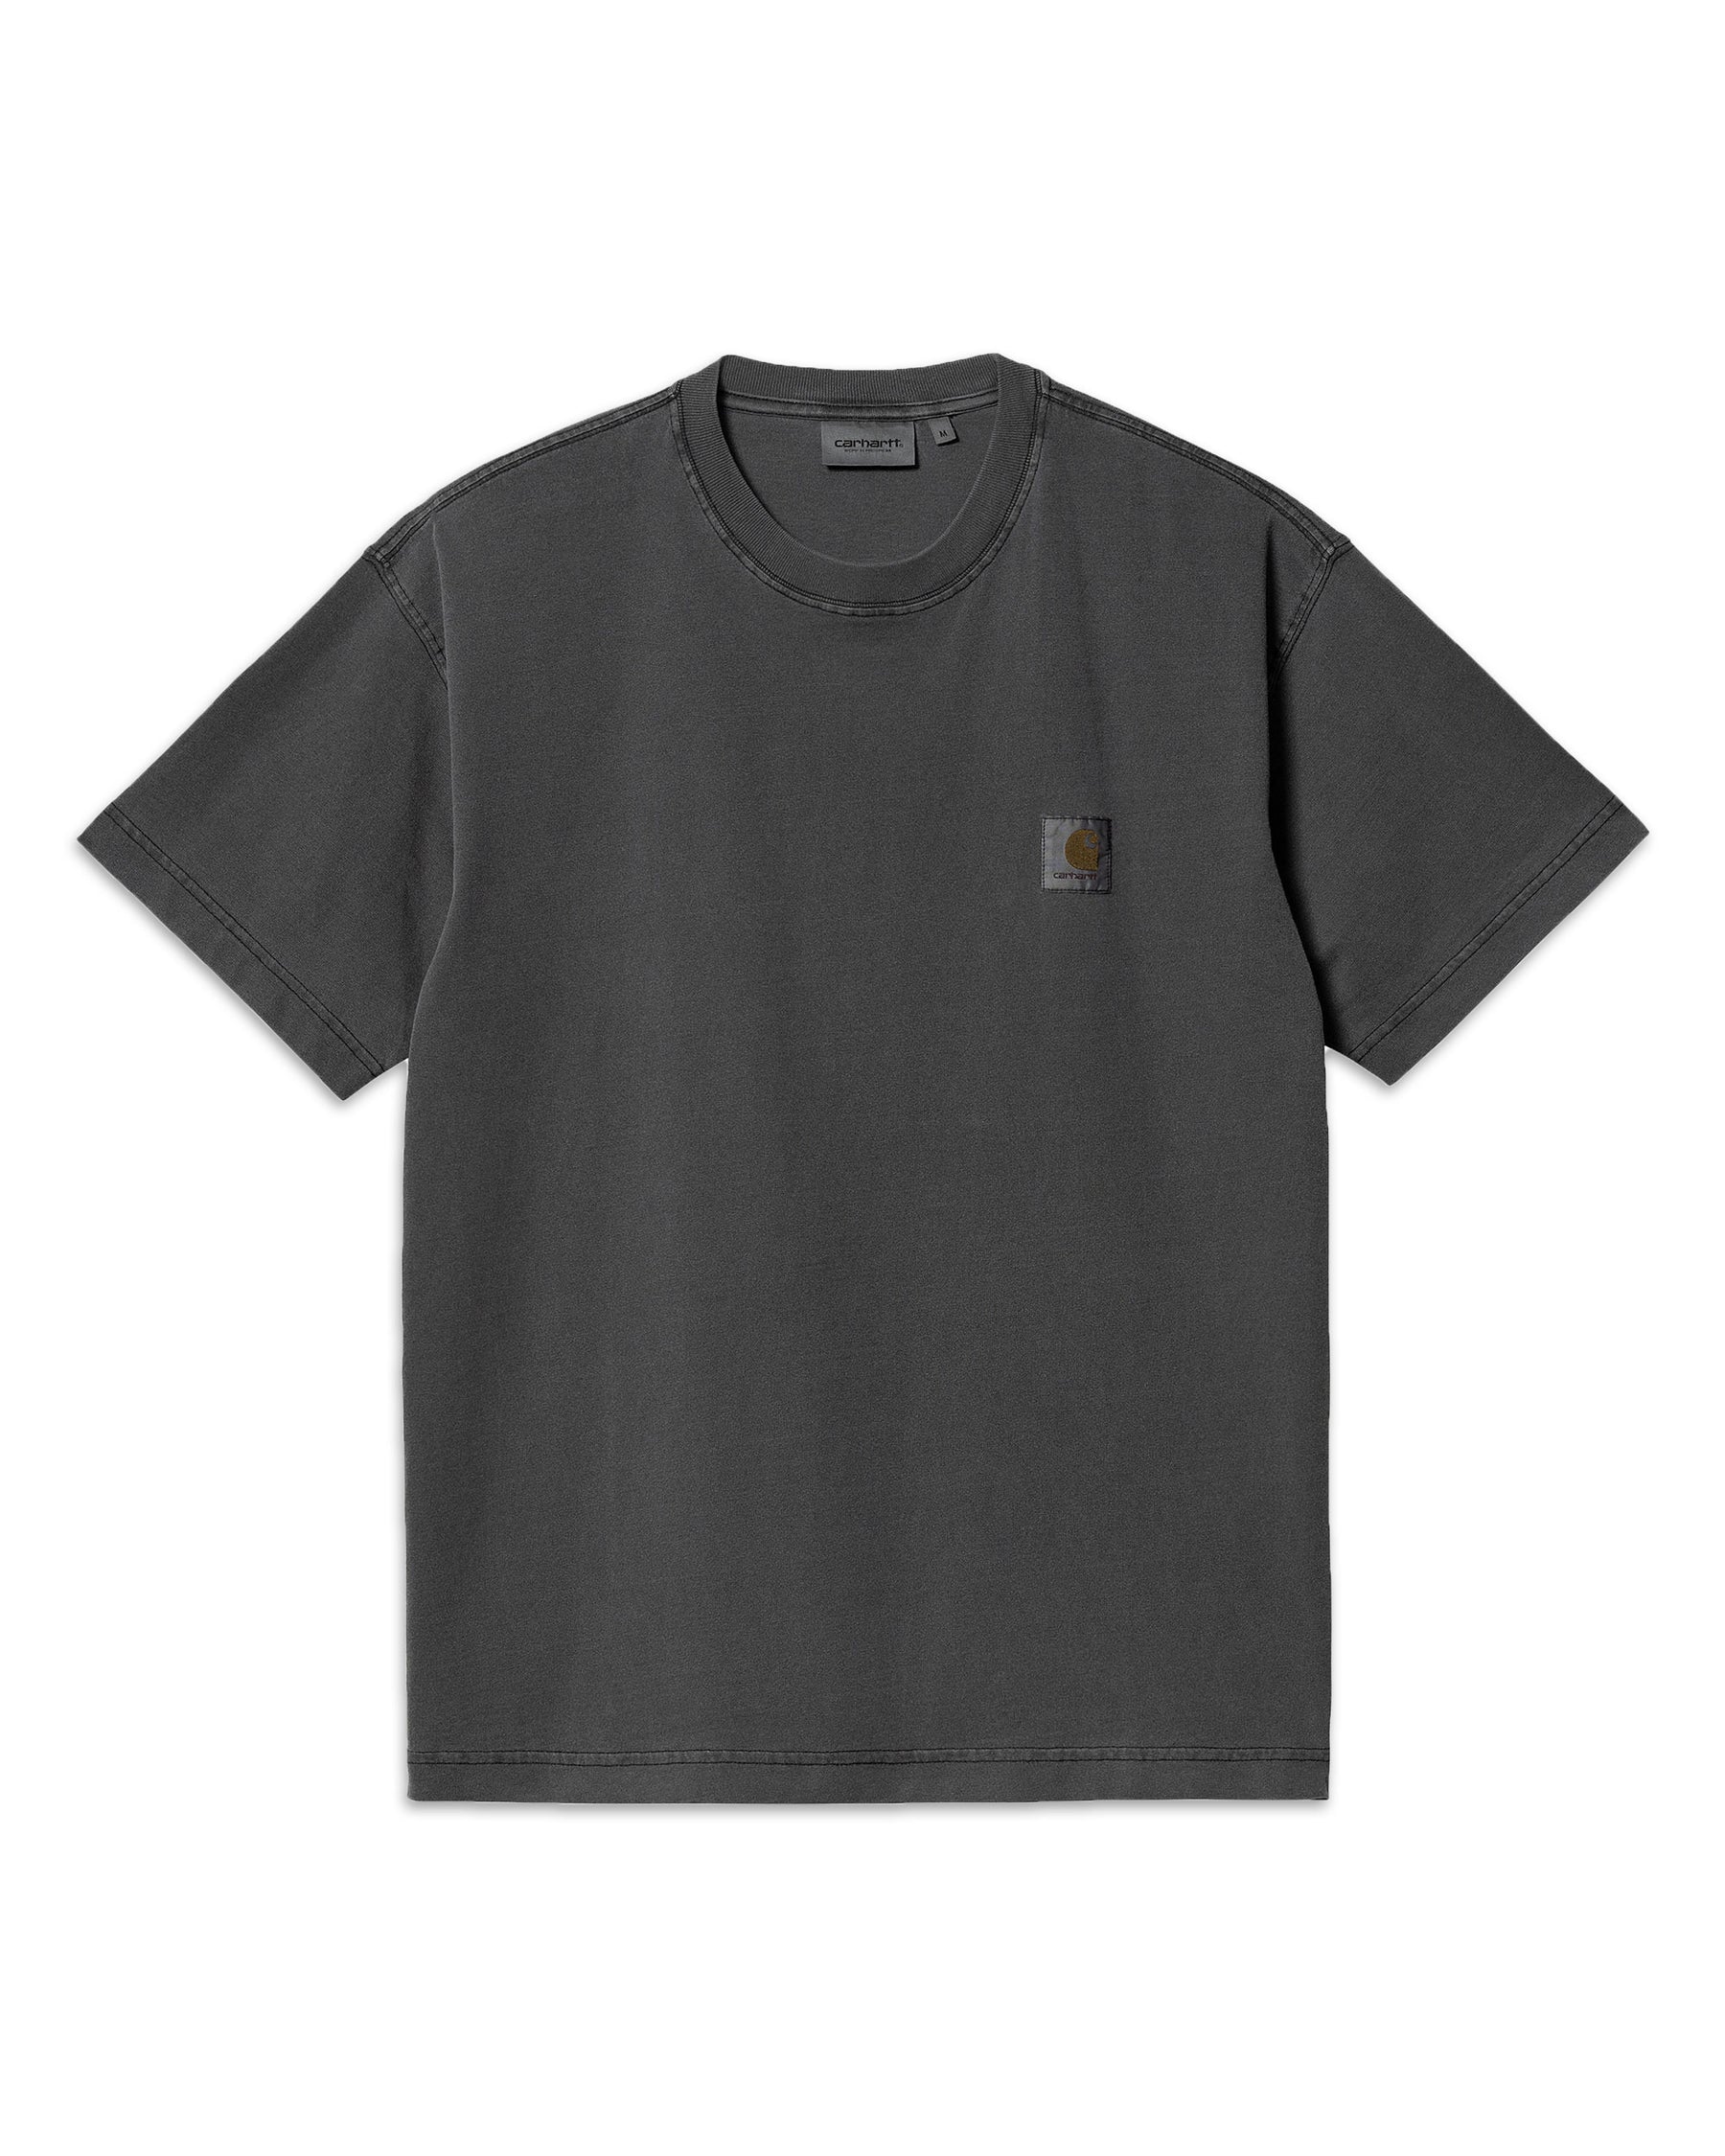 Carhartt Wip Nelson T-Shirt Black